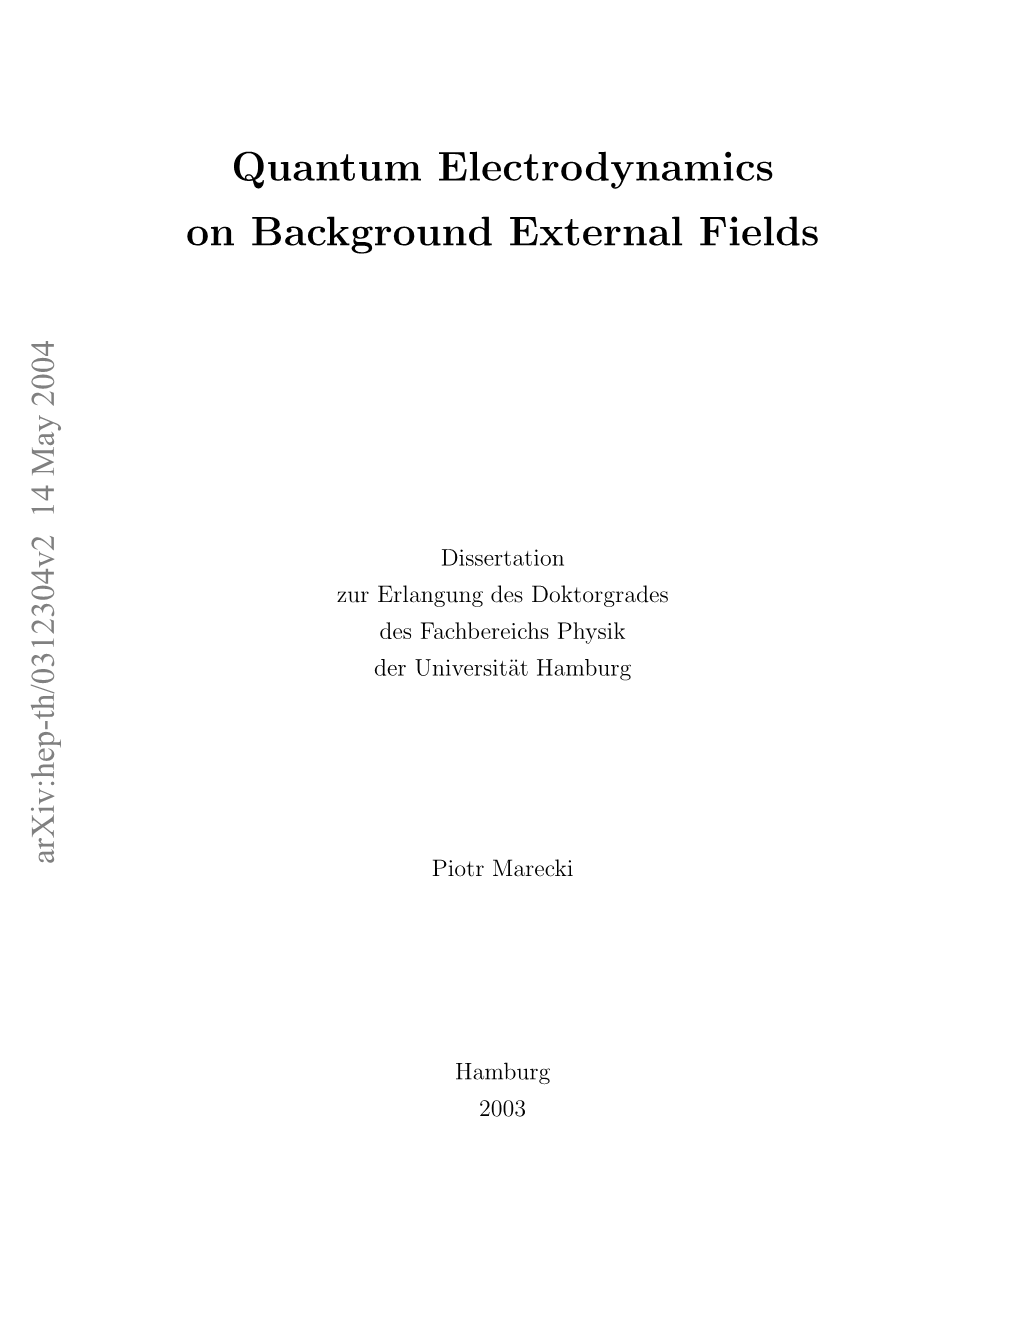 Quantum Electrodynamics on Background External Fields